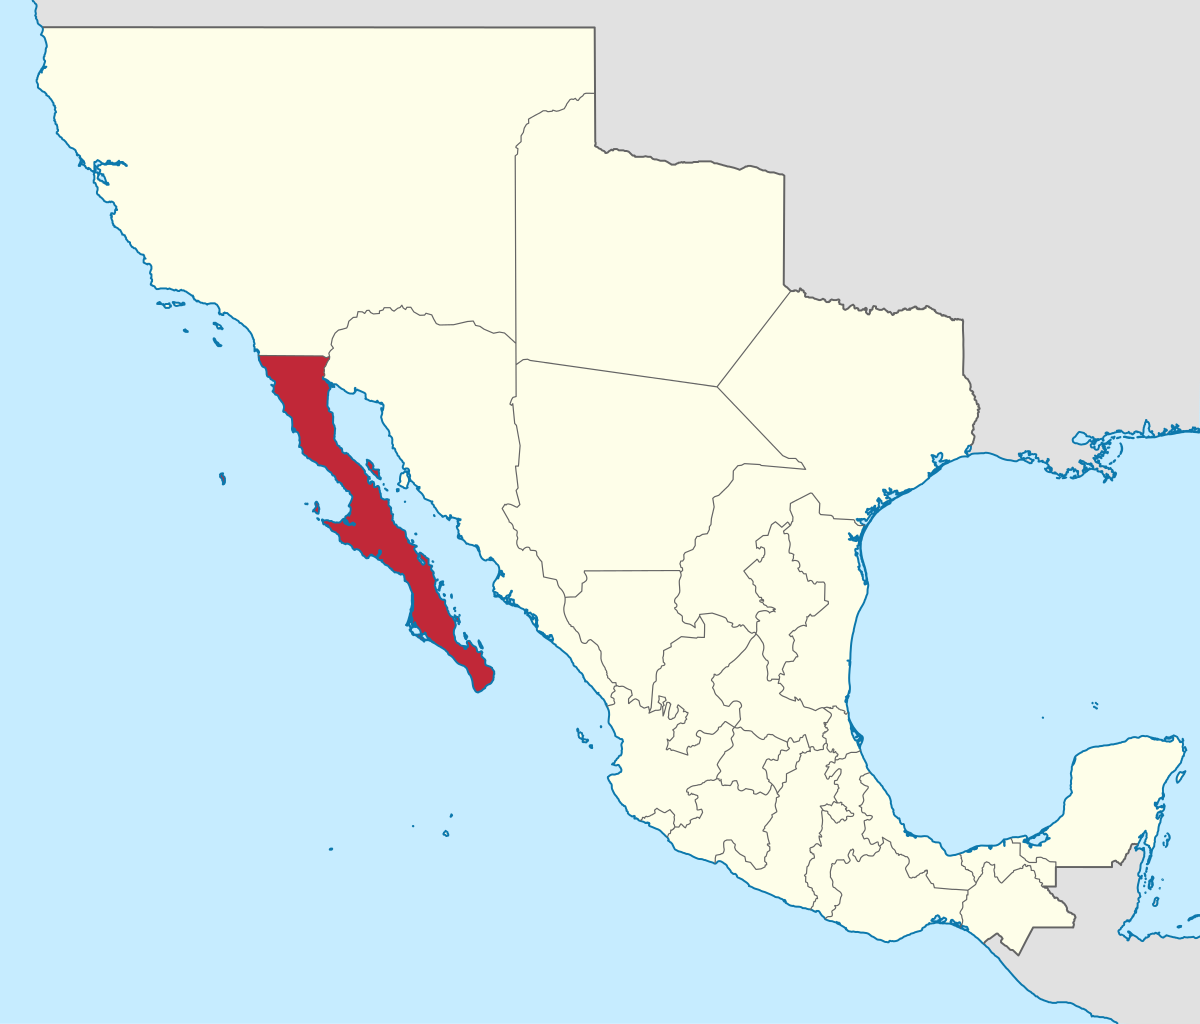 U.S.-China issues will benefit Baja California